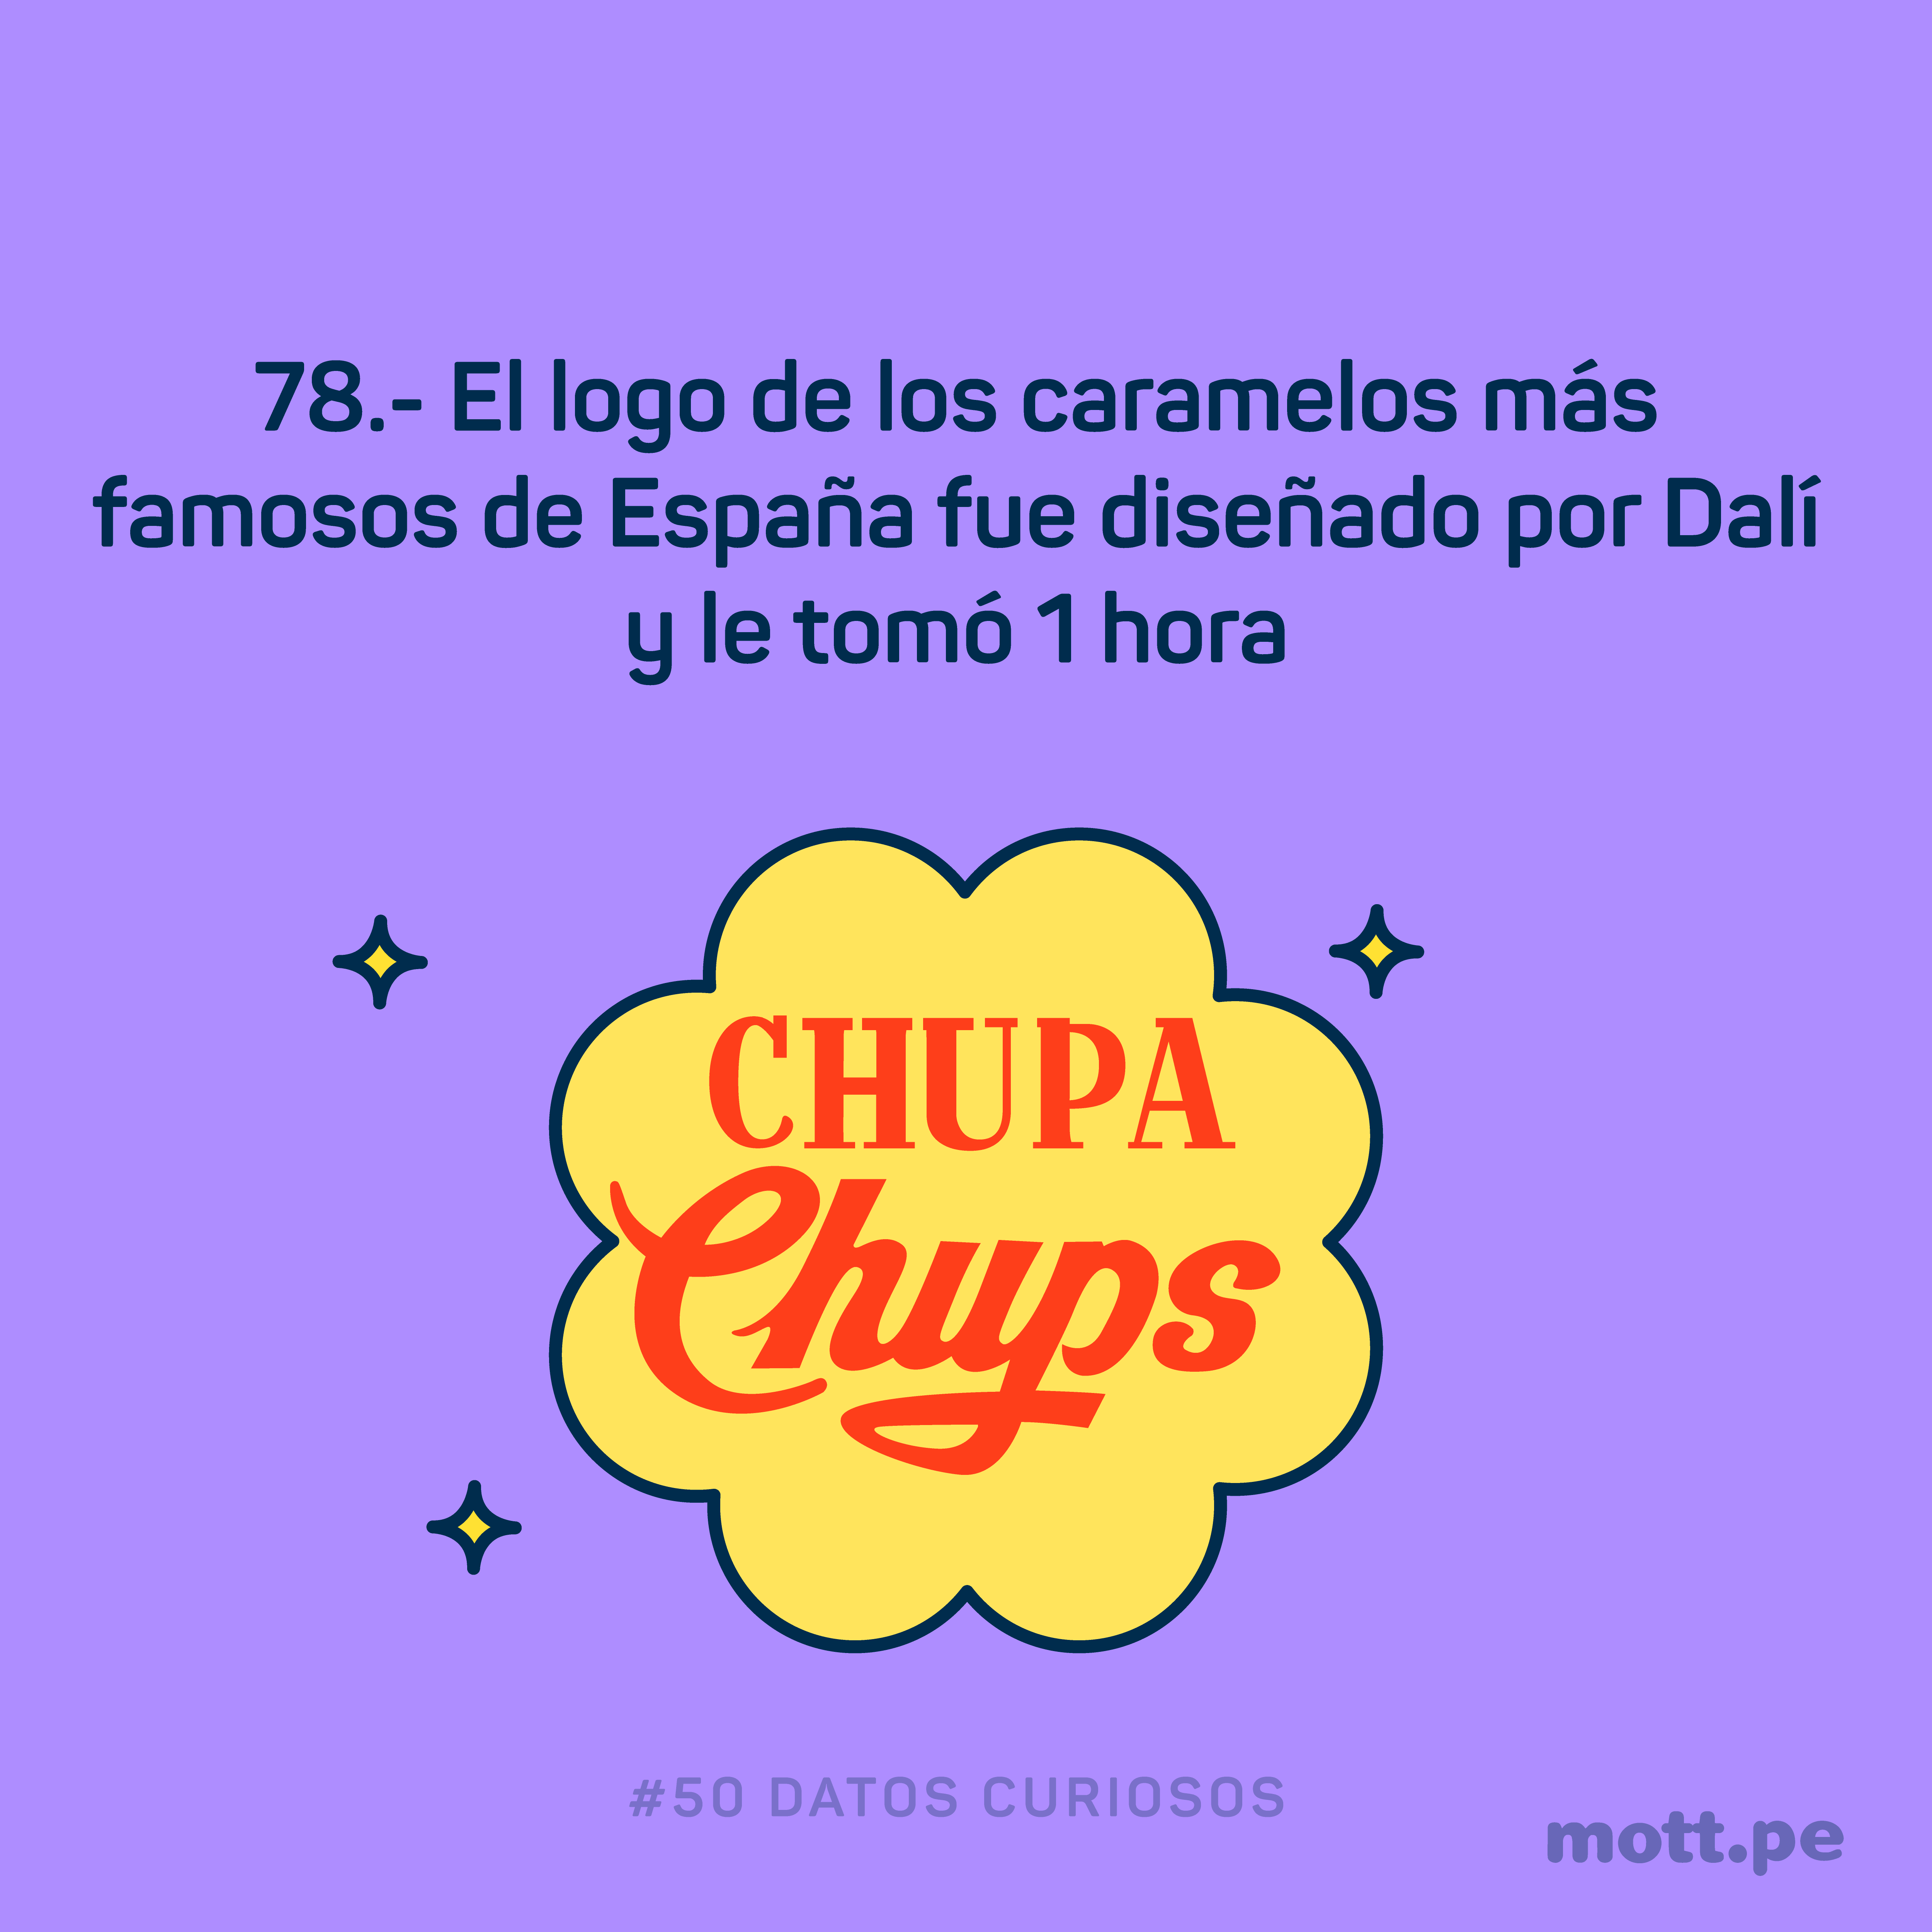 Dali hizo el logo de chupachups